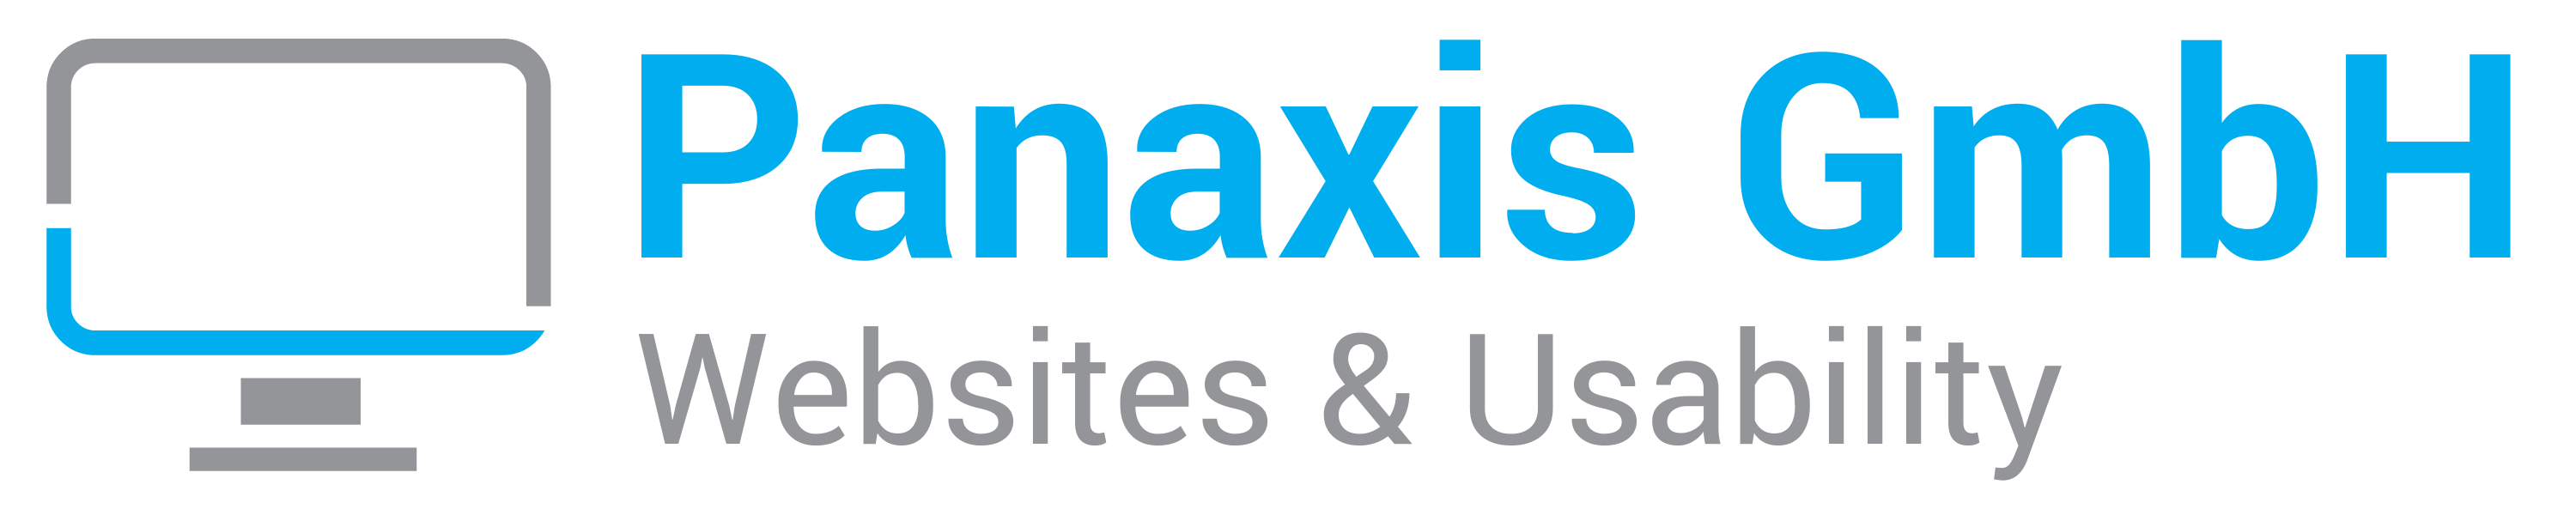 Panaxis GmbH Logo - Websites & Usability